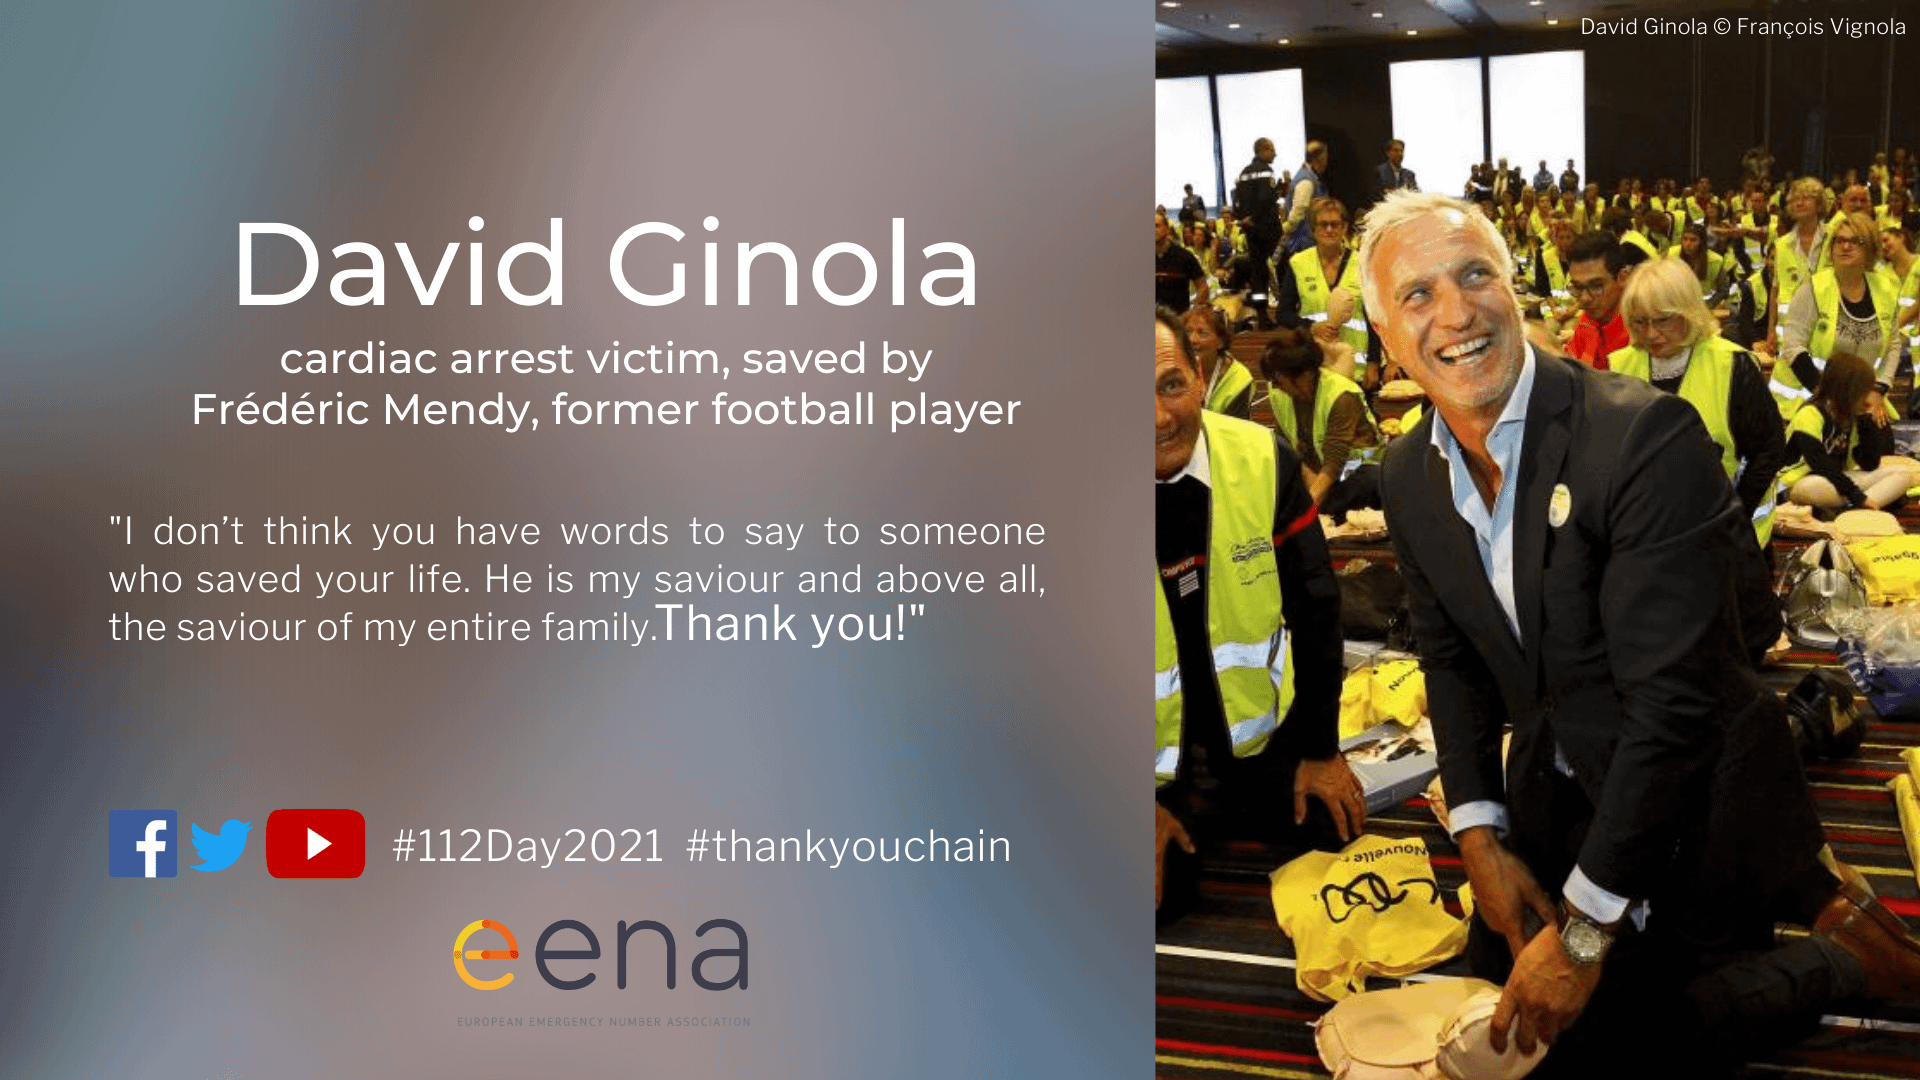 David Ginola thanks a citizen who saved his life